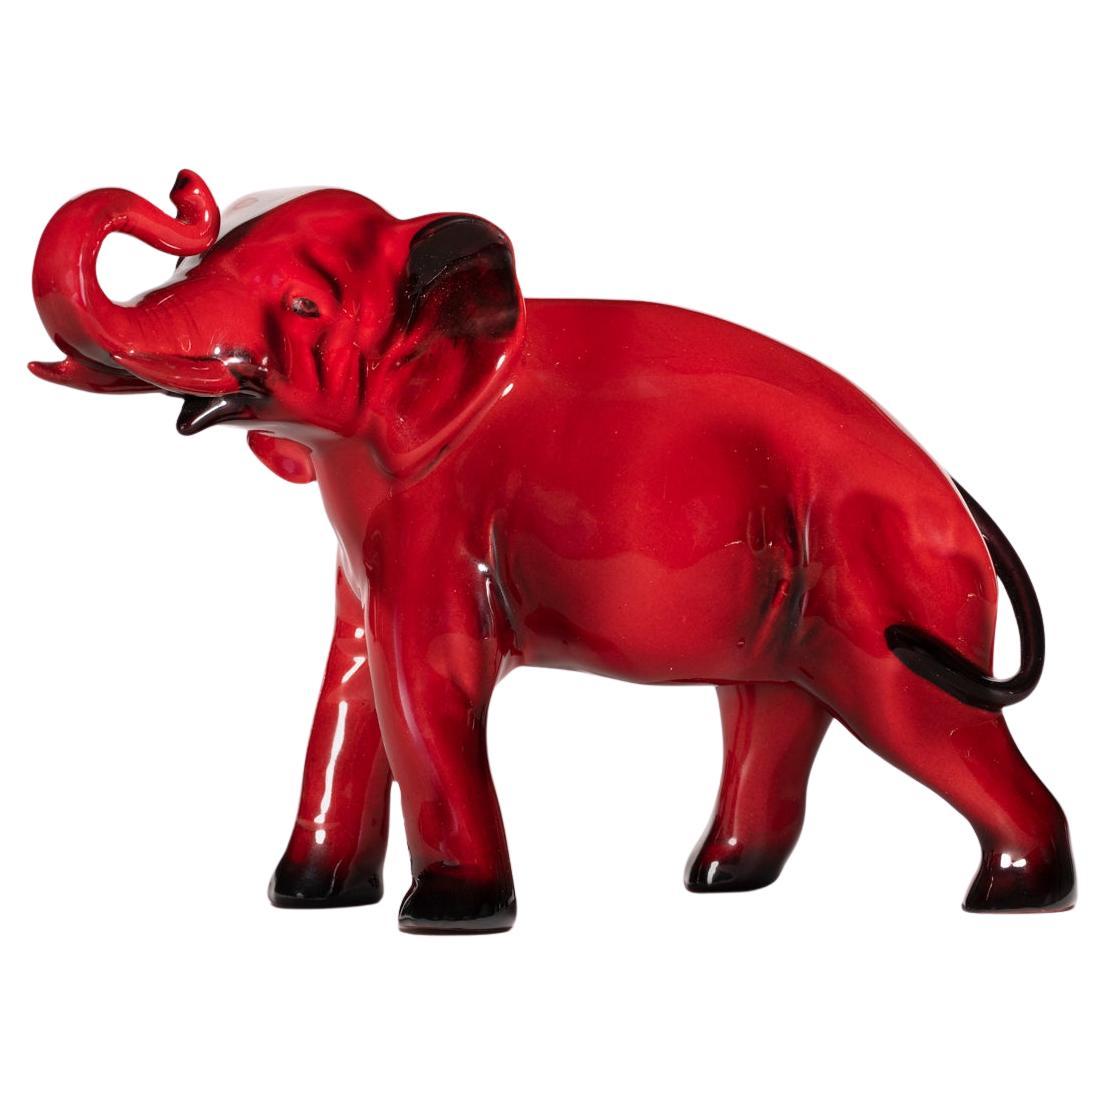 Royal Doulton Red Flambe Porcelain Figurine "ELEPHANT"